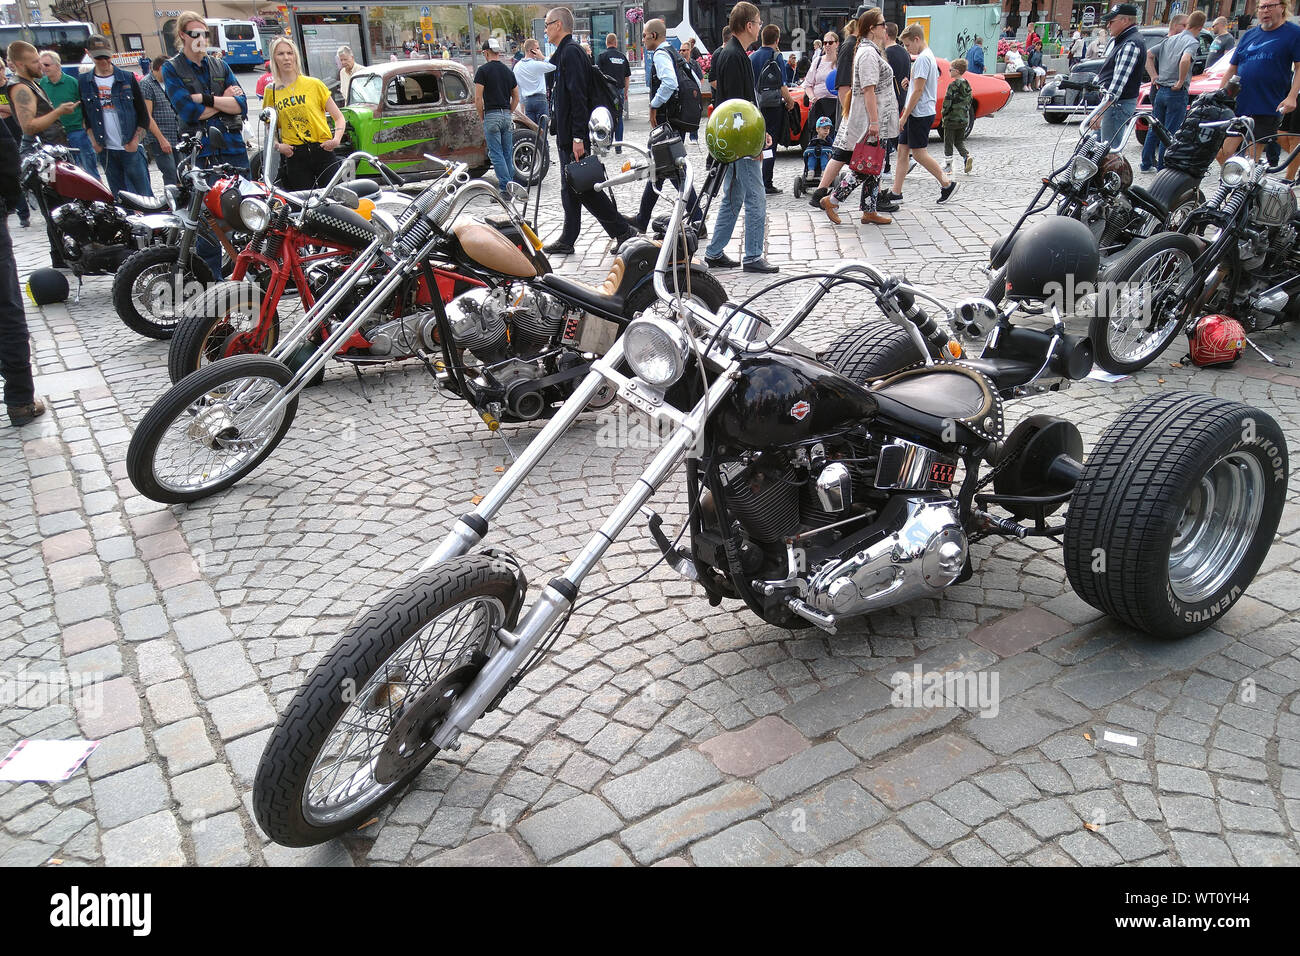 Motorcycles parked in bike show Mansen Mäntä Messut (Tampere piston fair in  English), Tampere, Finland Stock Photo - Alamy